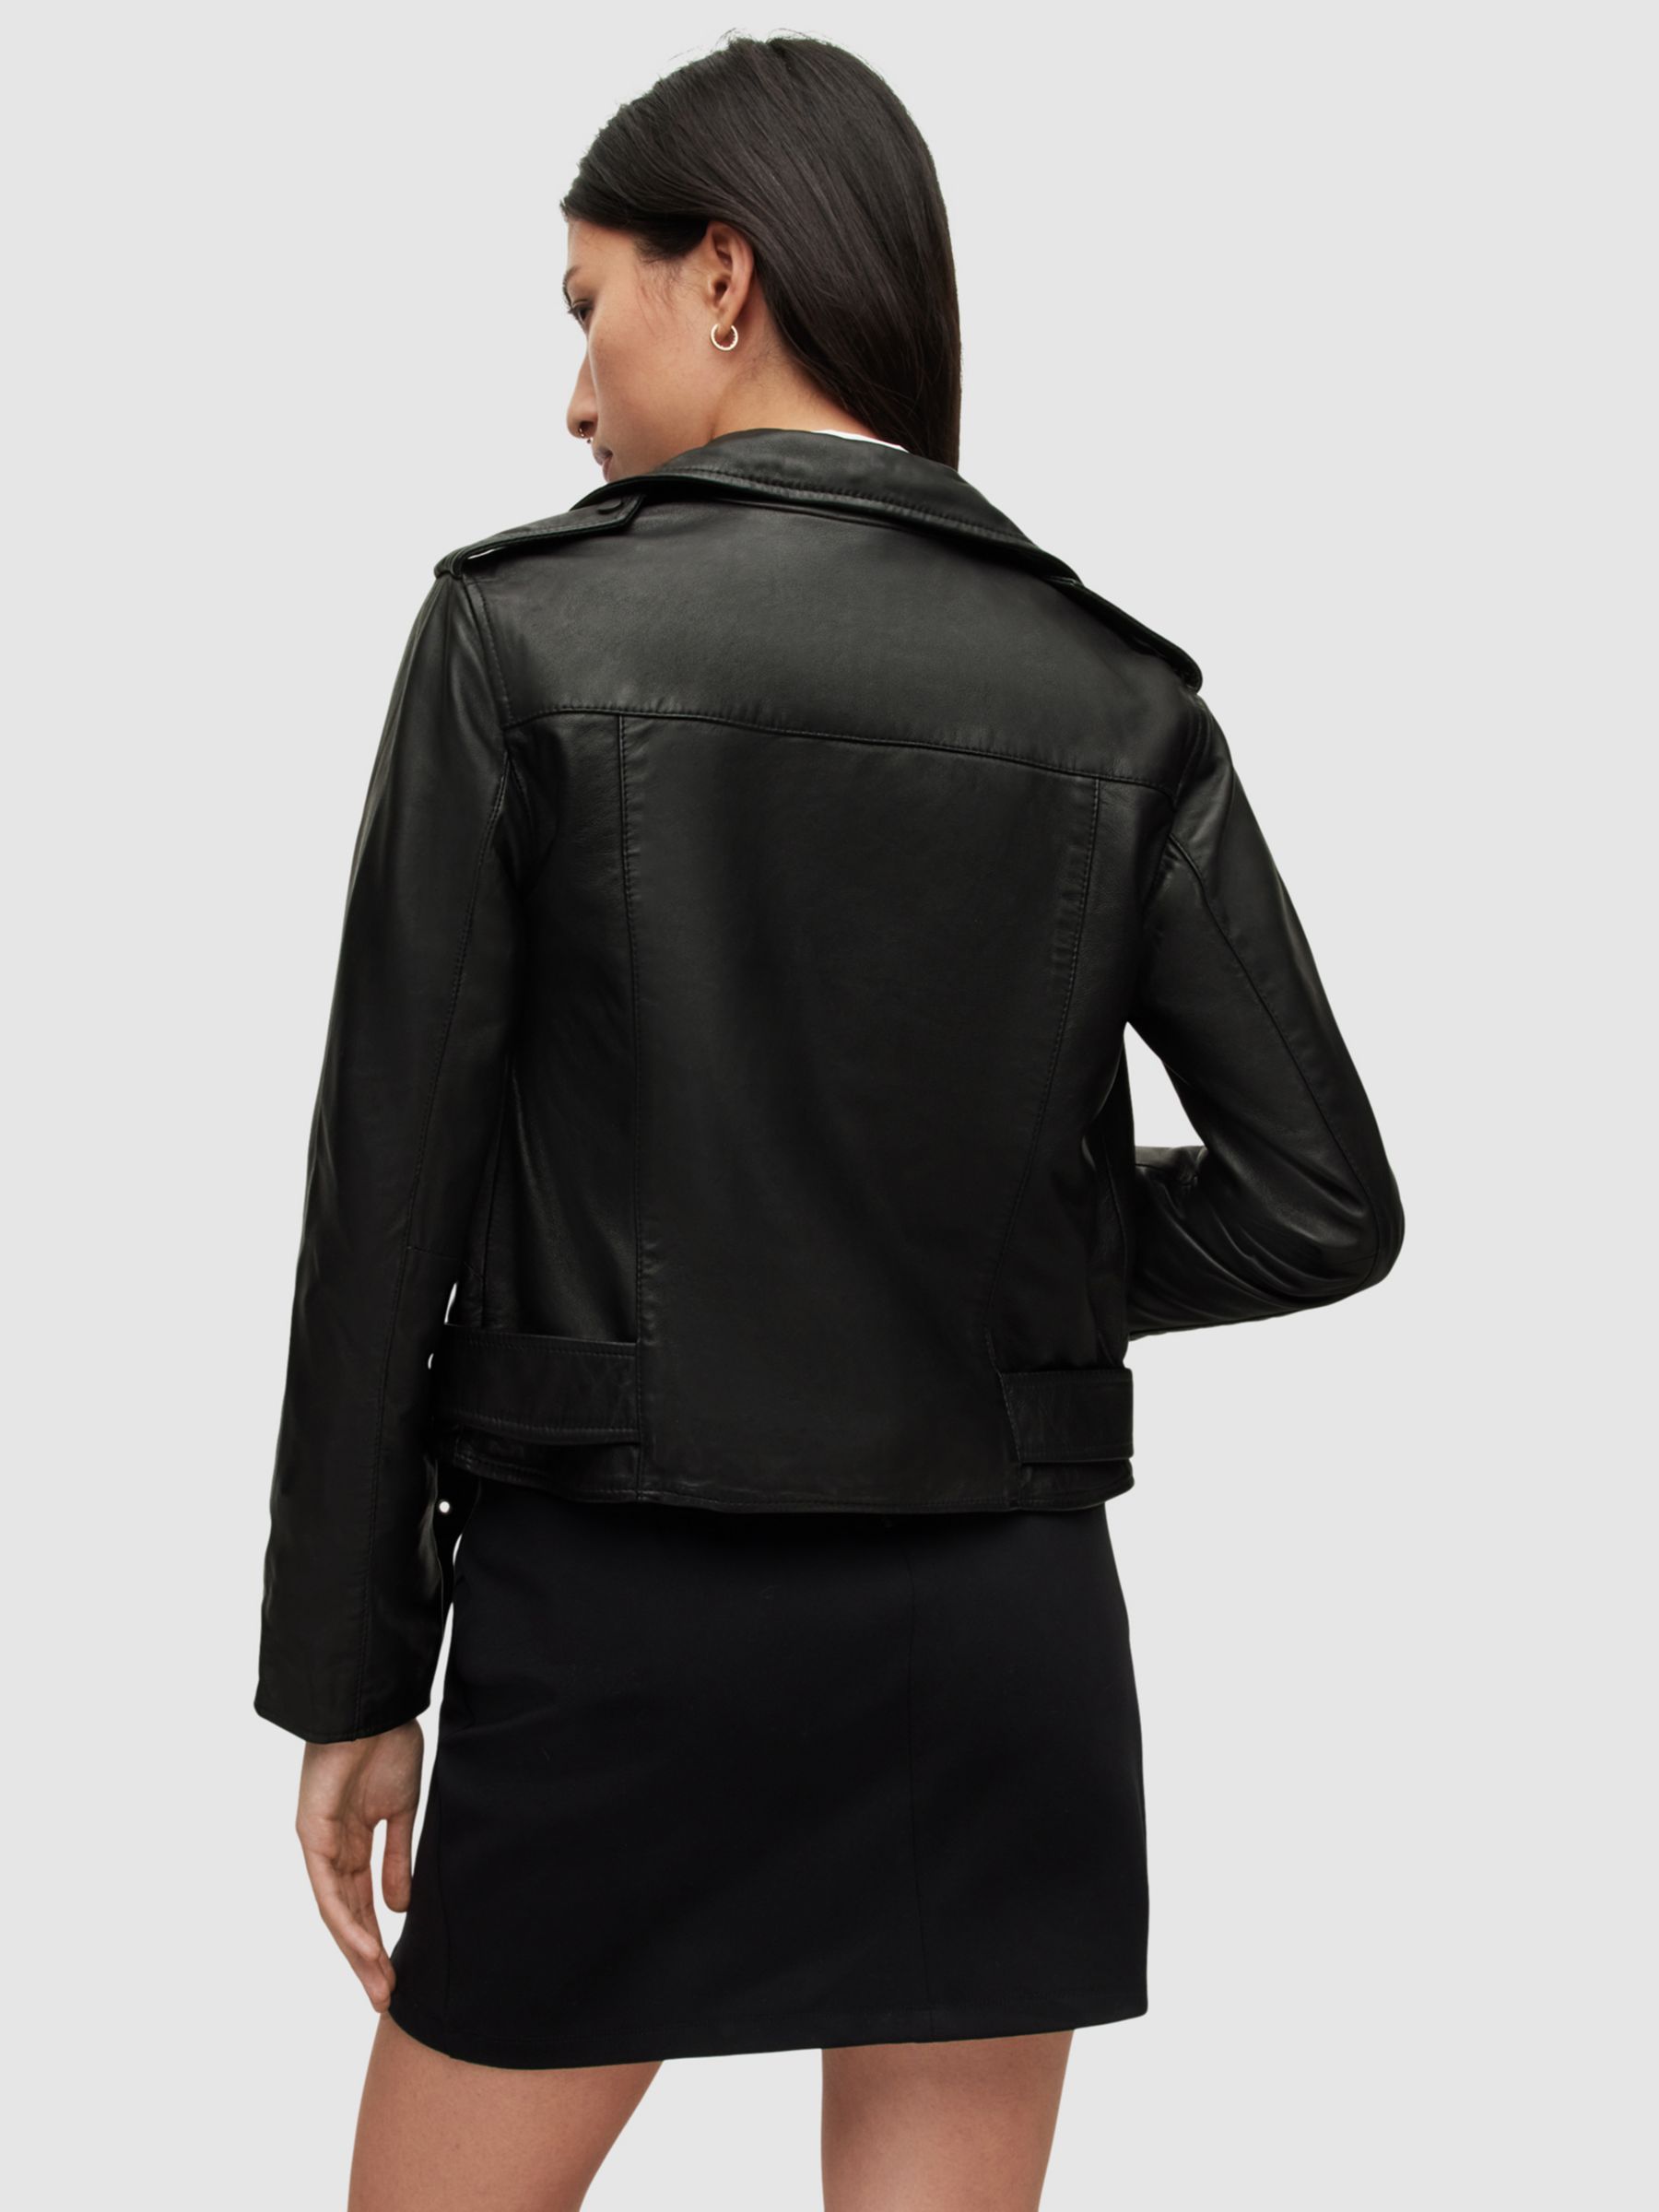 AllSaints Balfern Leather Biker Jacket, Black at John Lewis & Partners